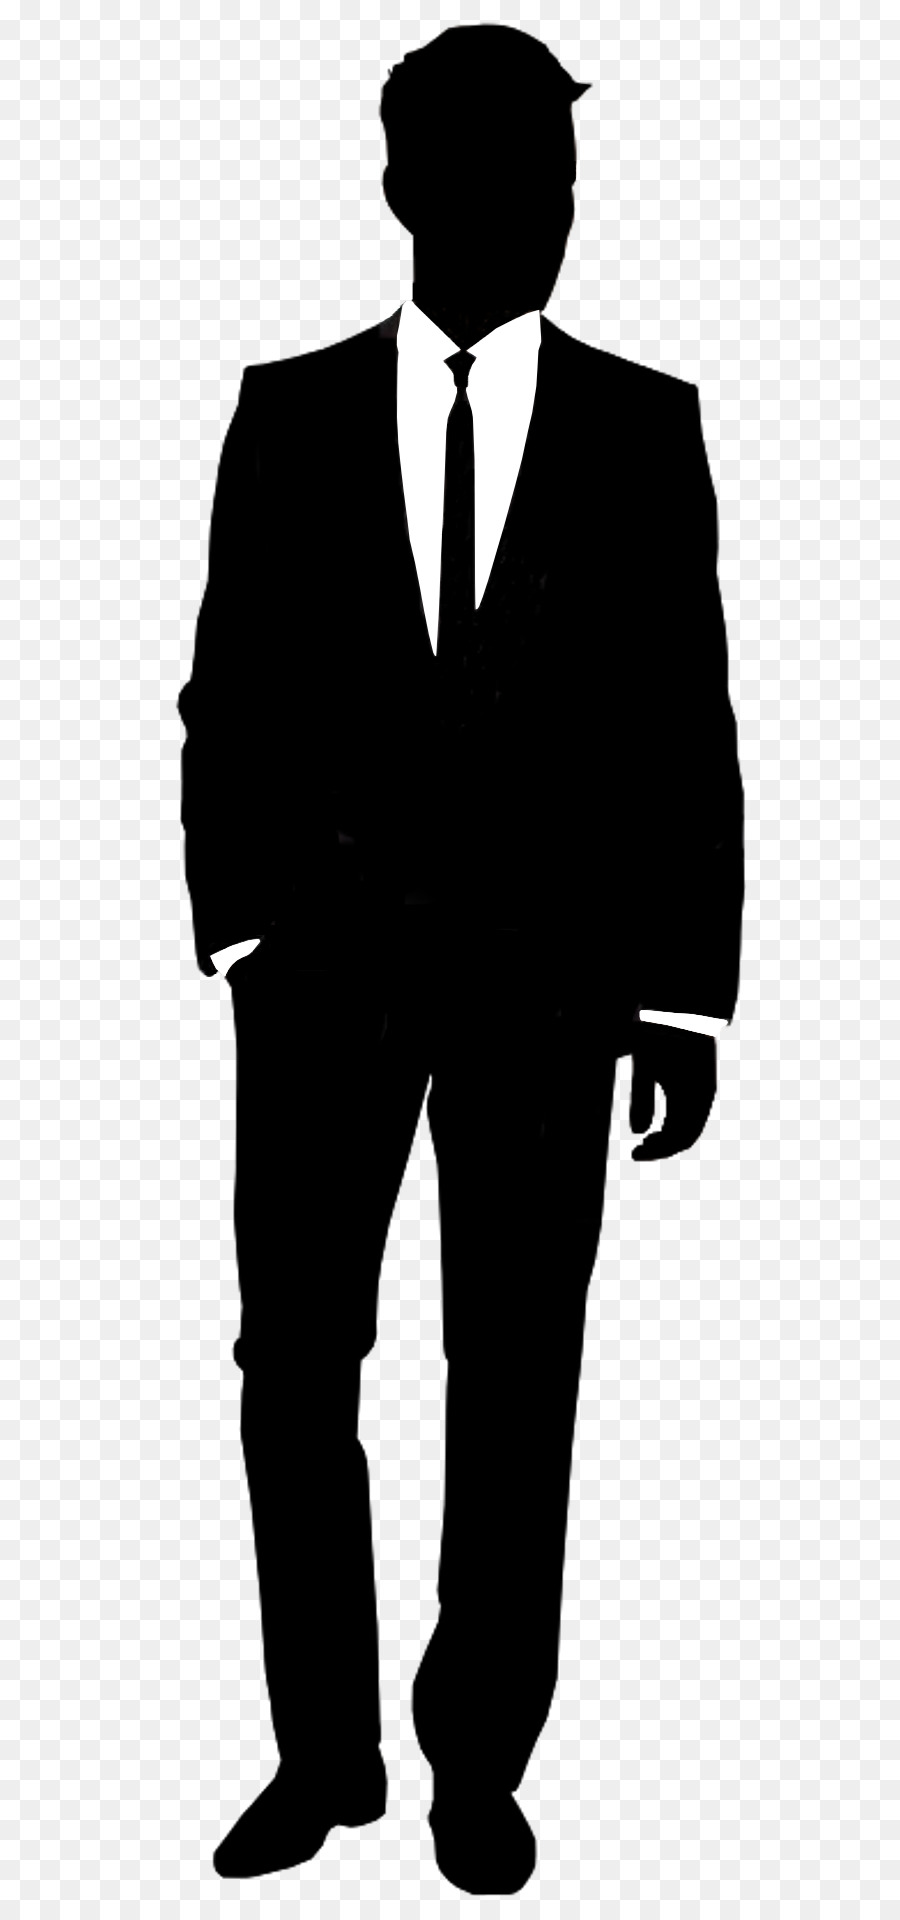 Suit Silhouette Shirt Informal attire - gentleman png download - 630*1920 - Free Transparent Suit png Download.